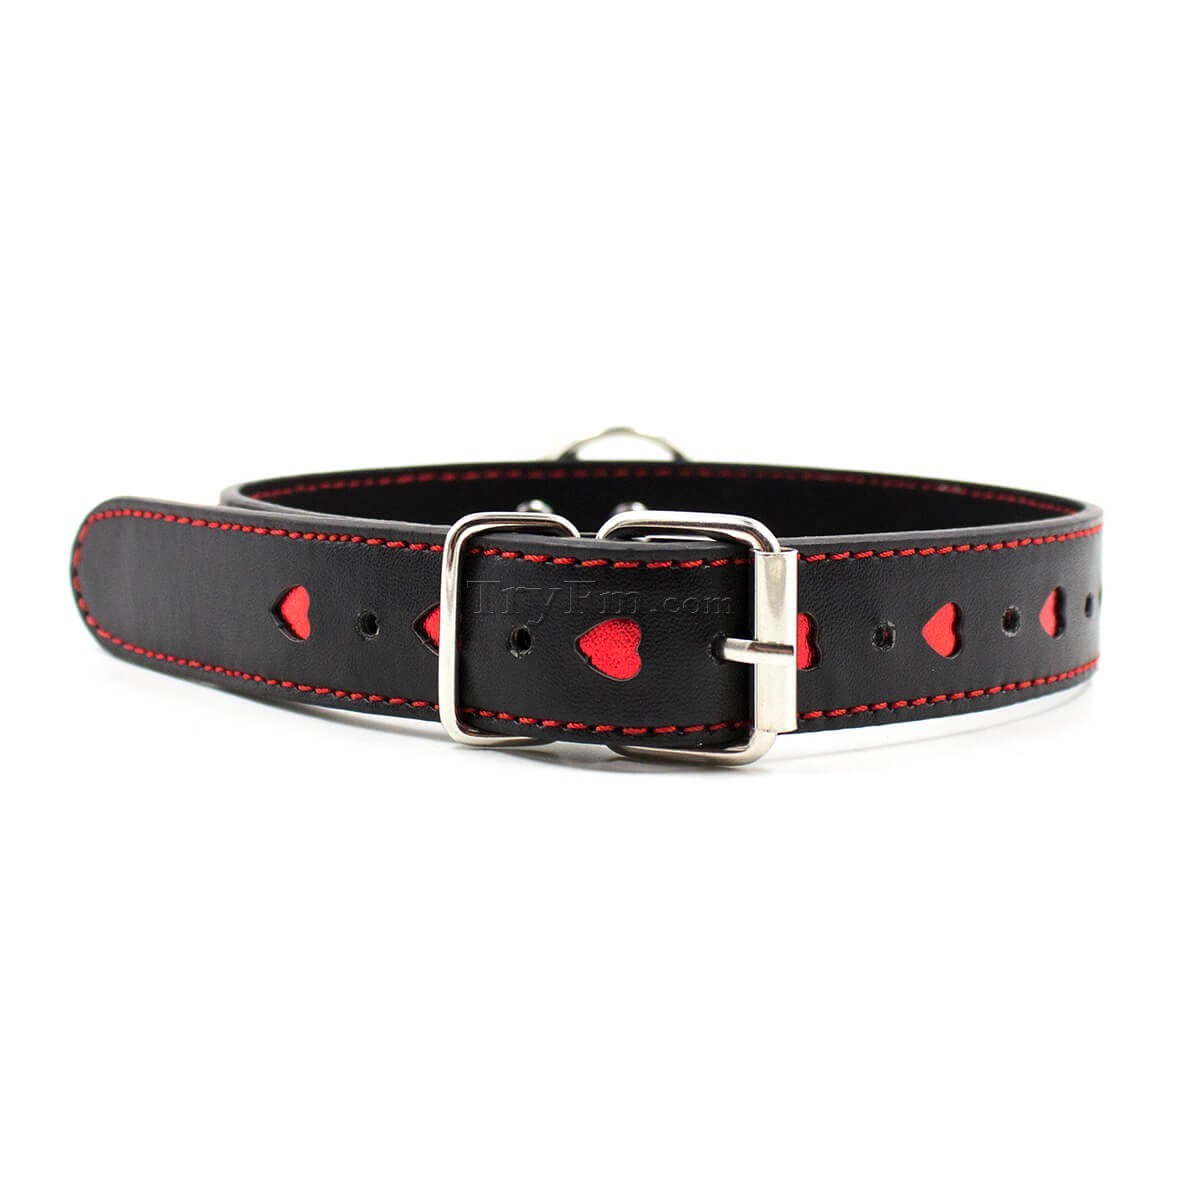 Cute Red-heart Collar - TRYFM.COM